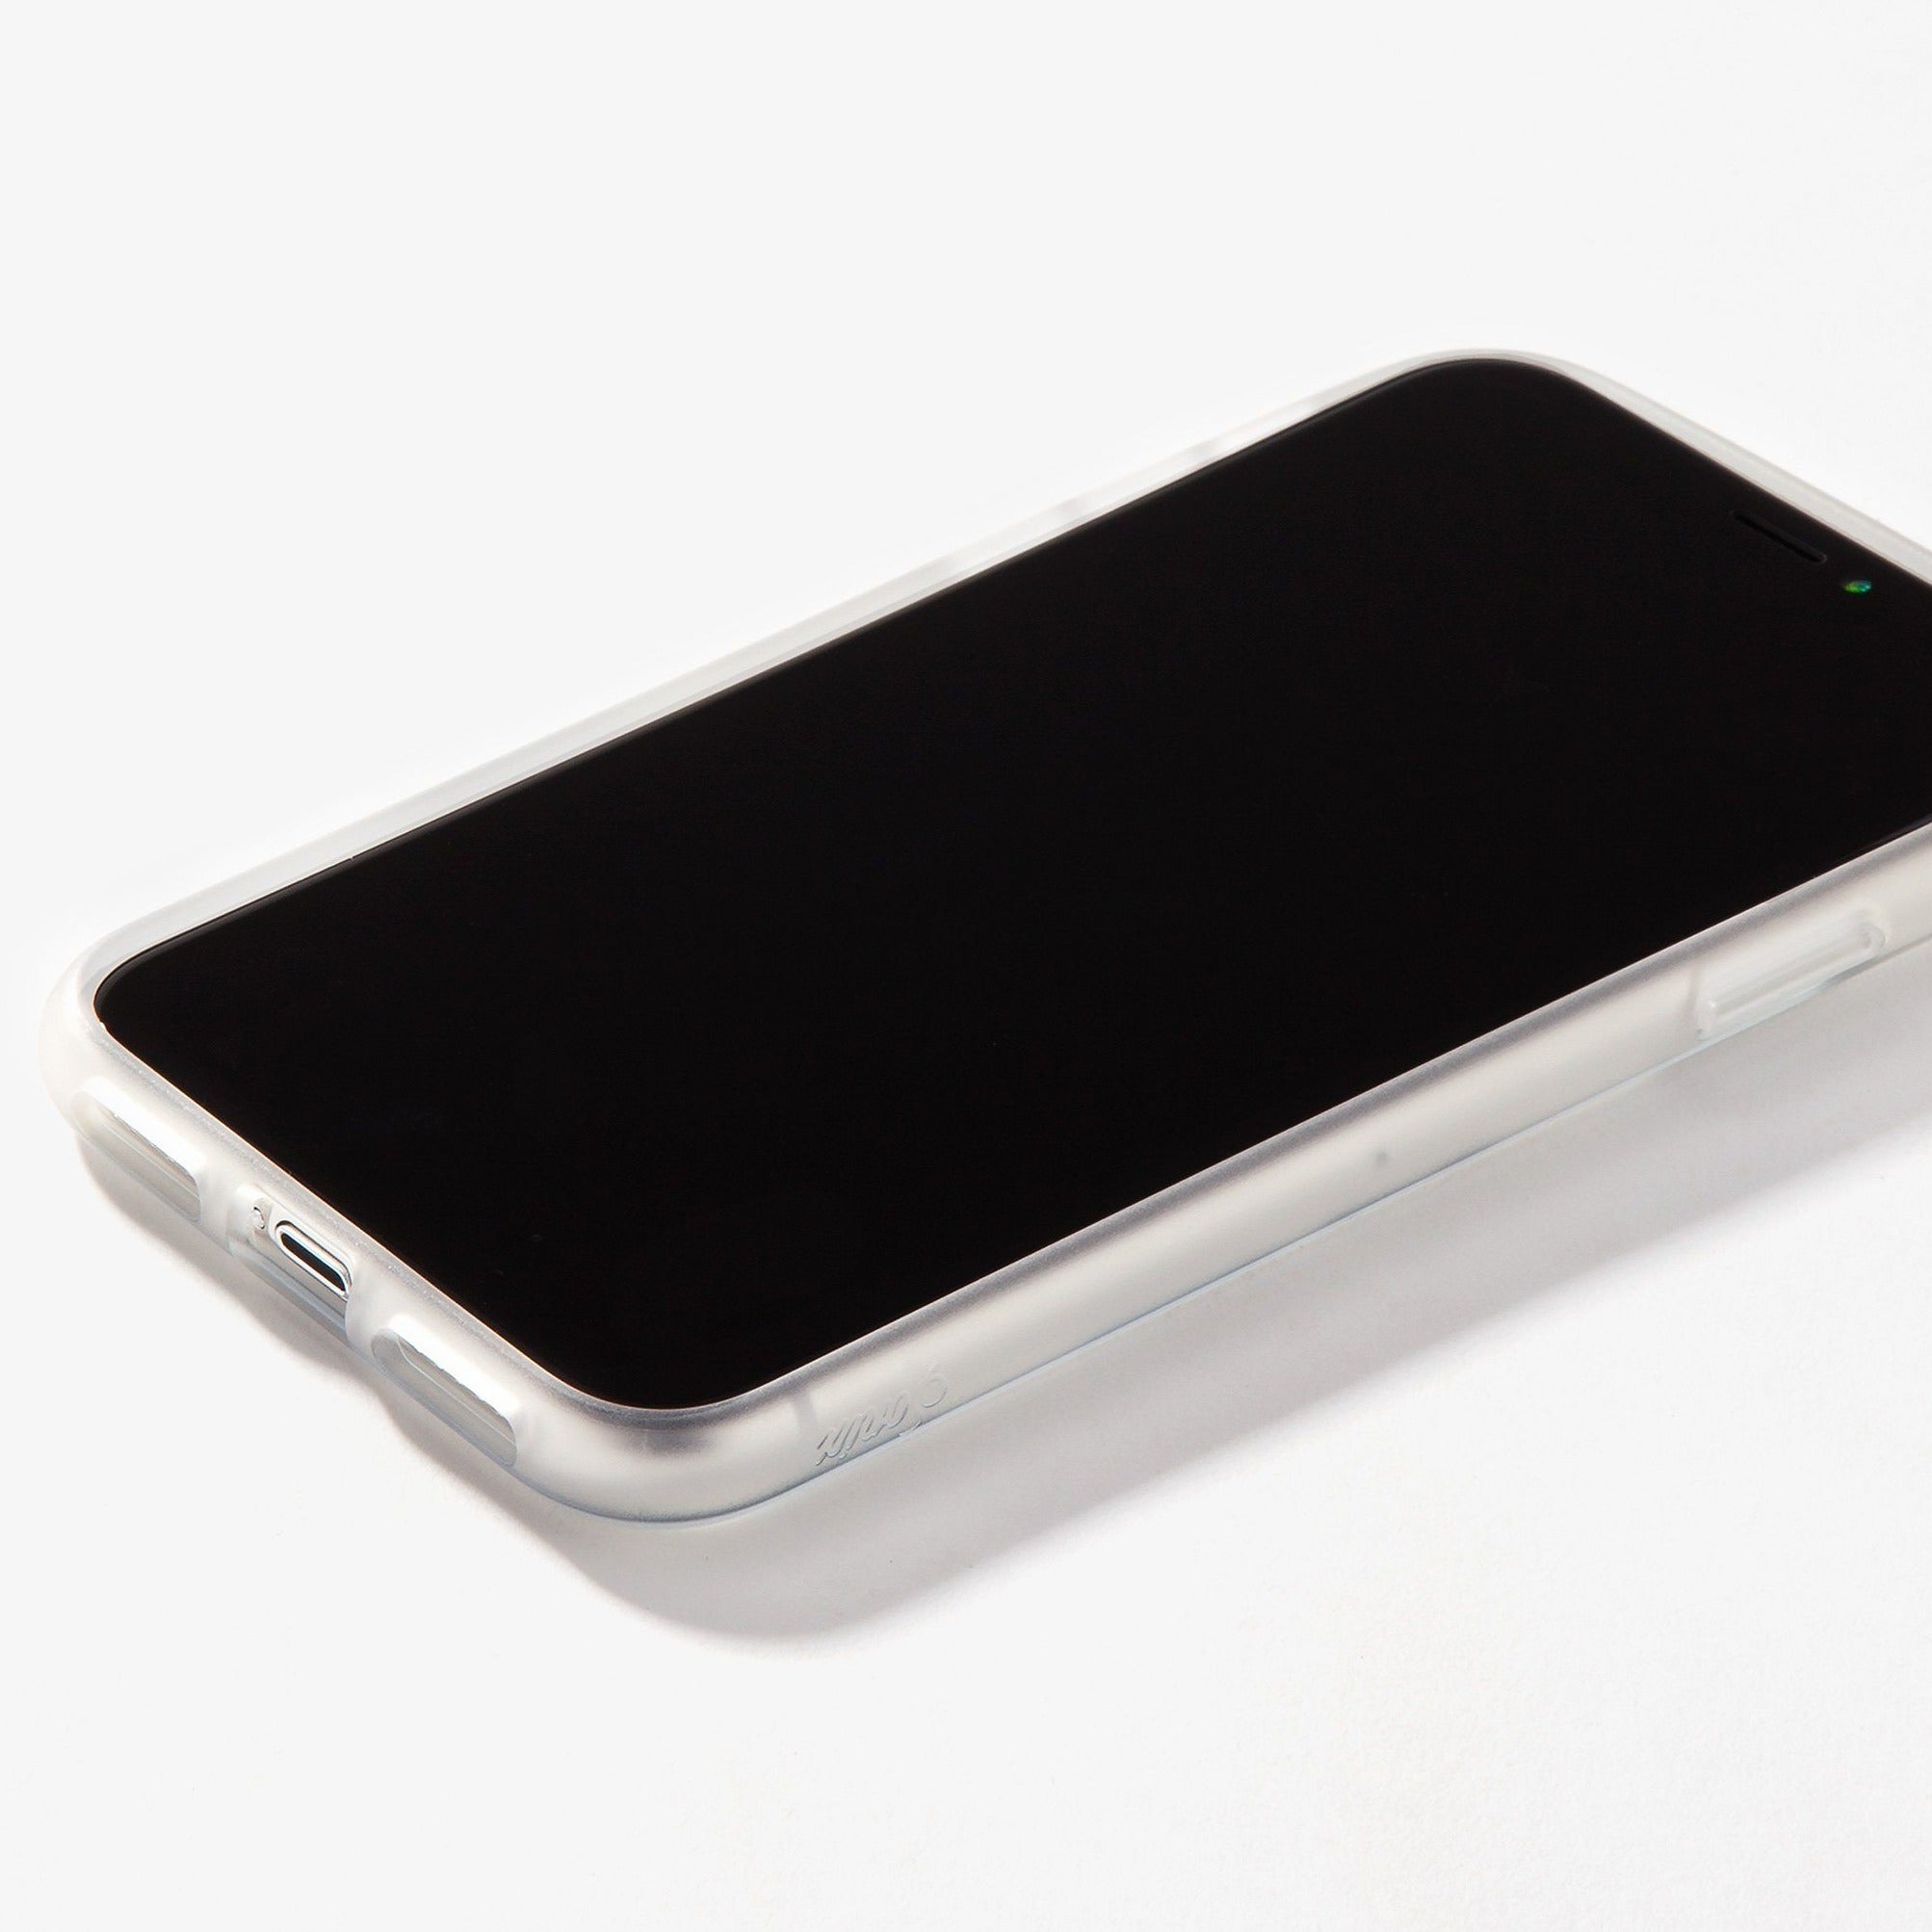 Sonix - Protective case - Silver Glitter, iPhone X / XS